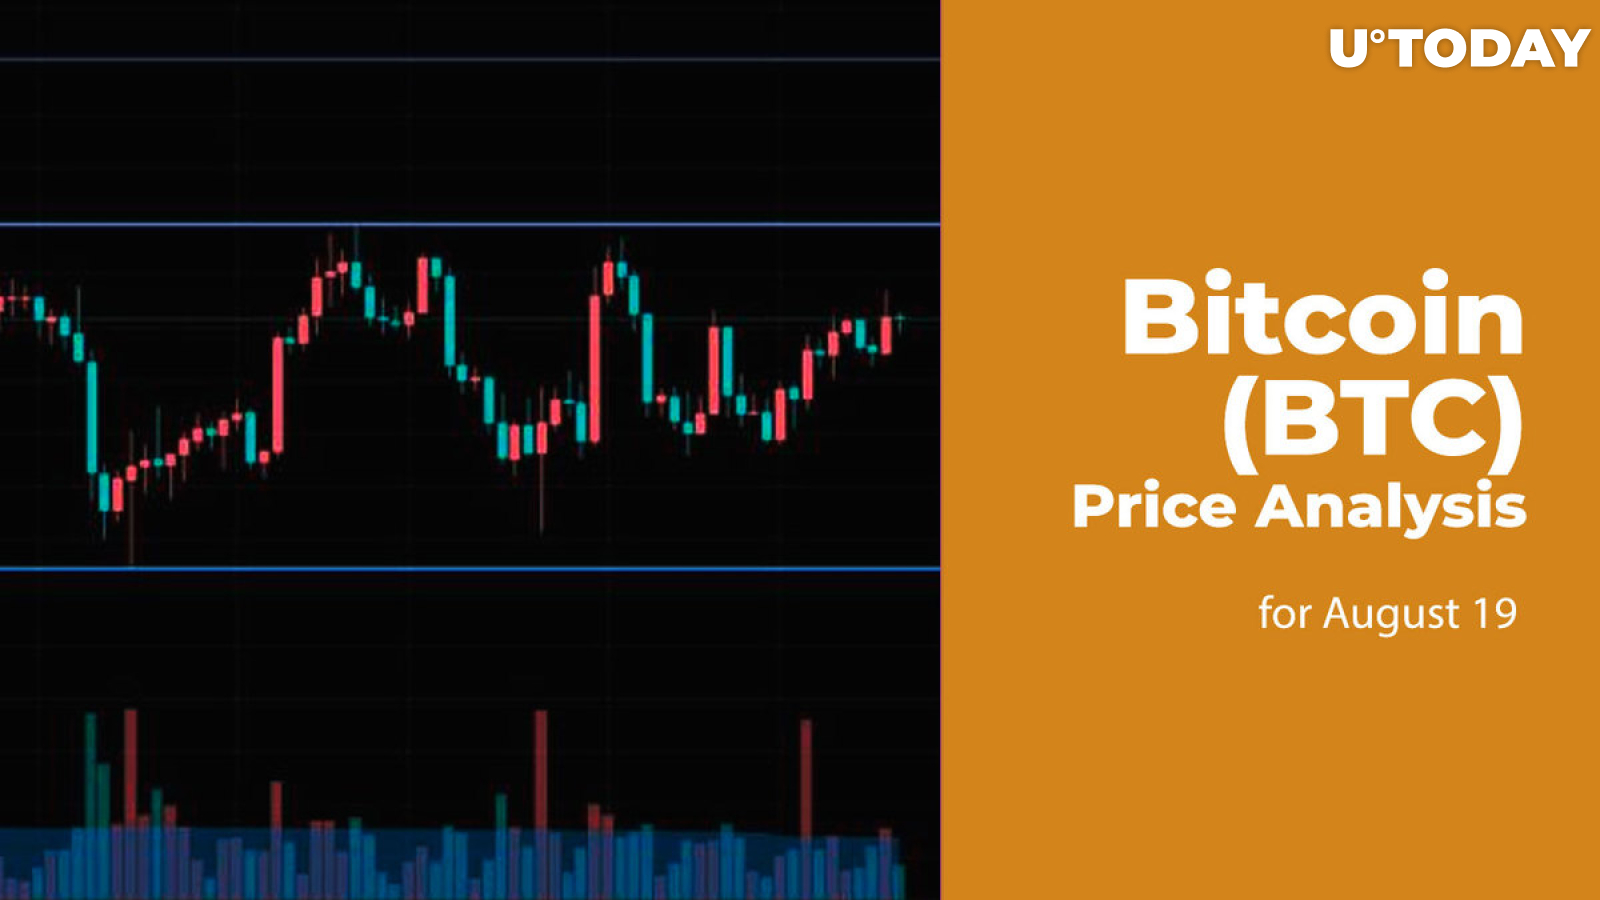 Bitcoin (BTC) Price Analysis for August 19